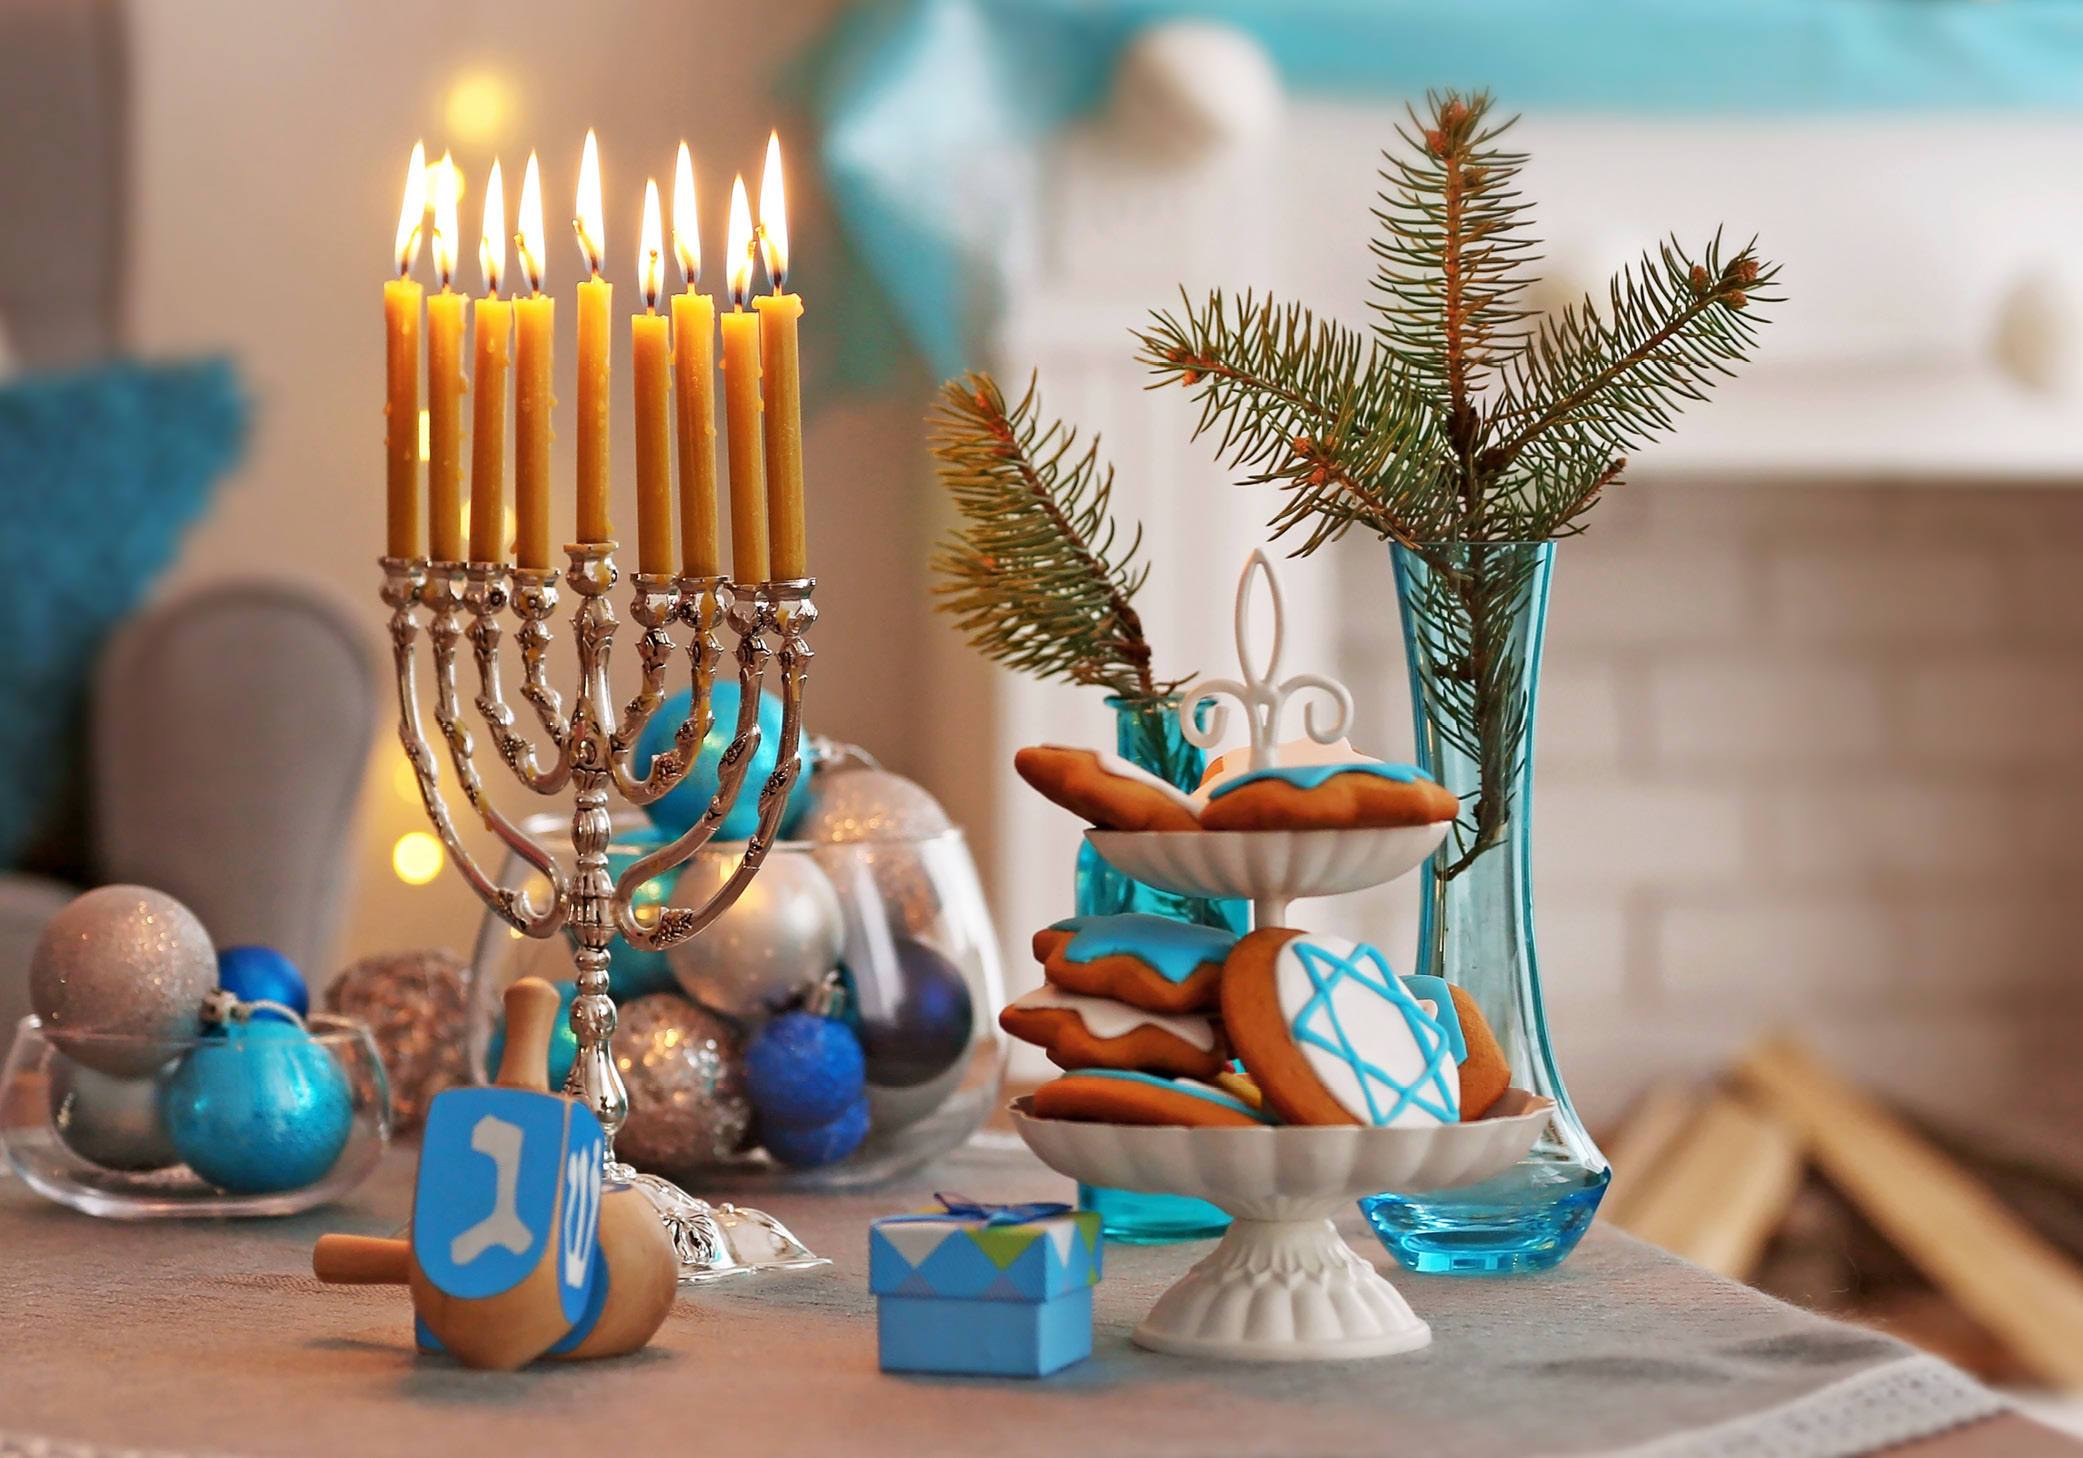 Hanukkak candles and items